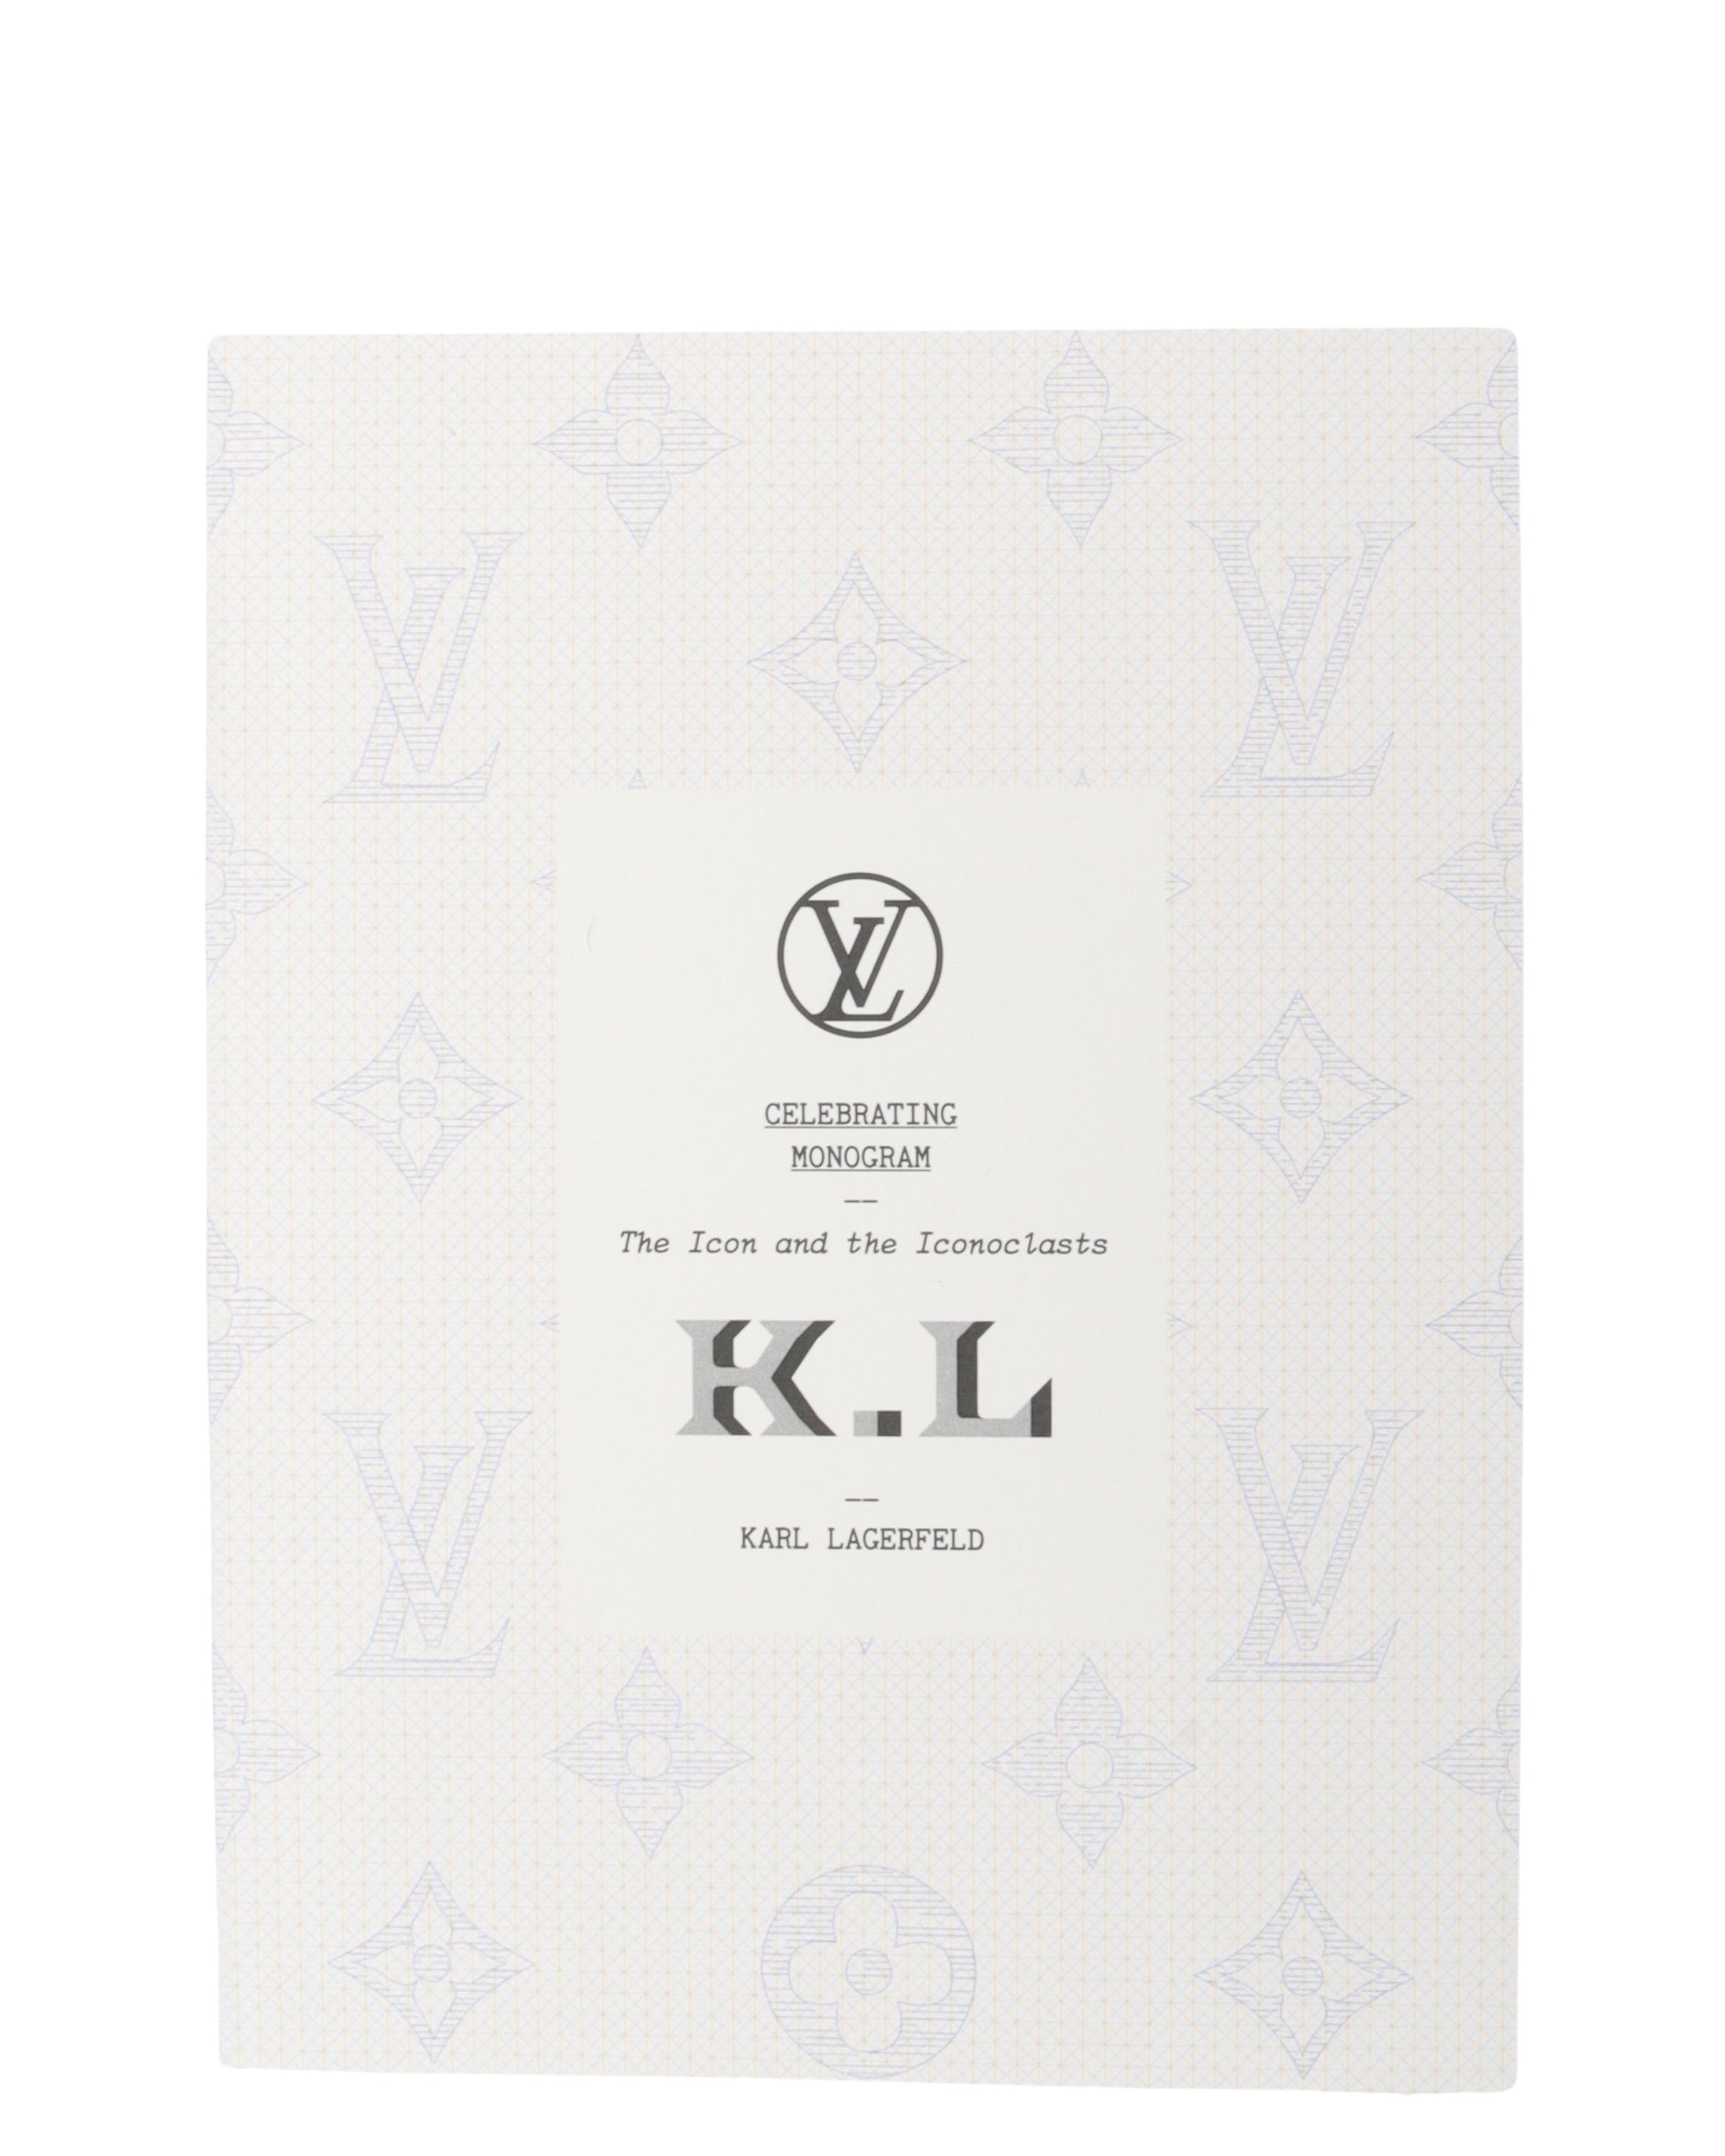 Louis Vuitton - Karl Lagerfeld Boxing Gloves.#karllagerfeld #boxing  #boxinggloves #boxinglove